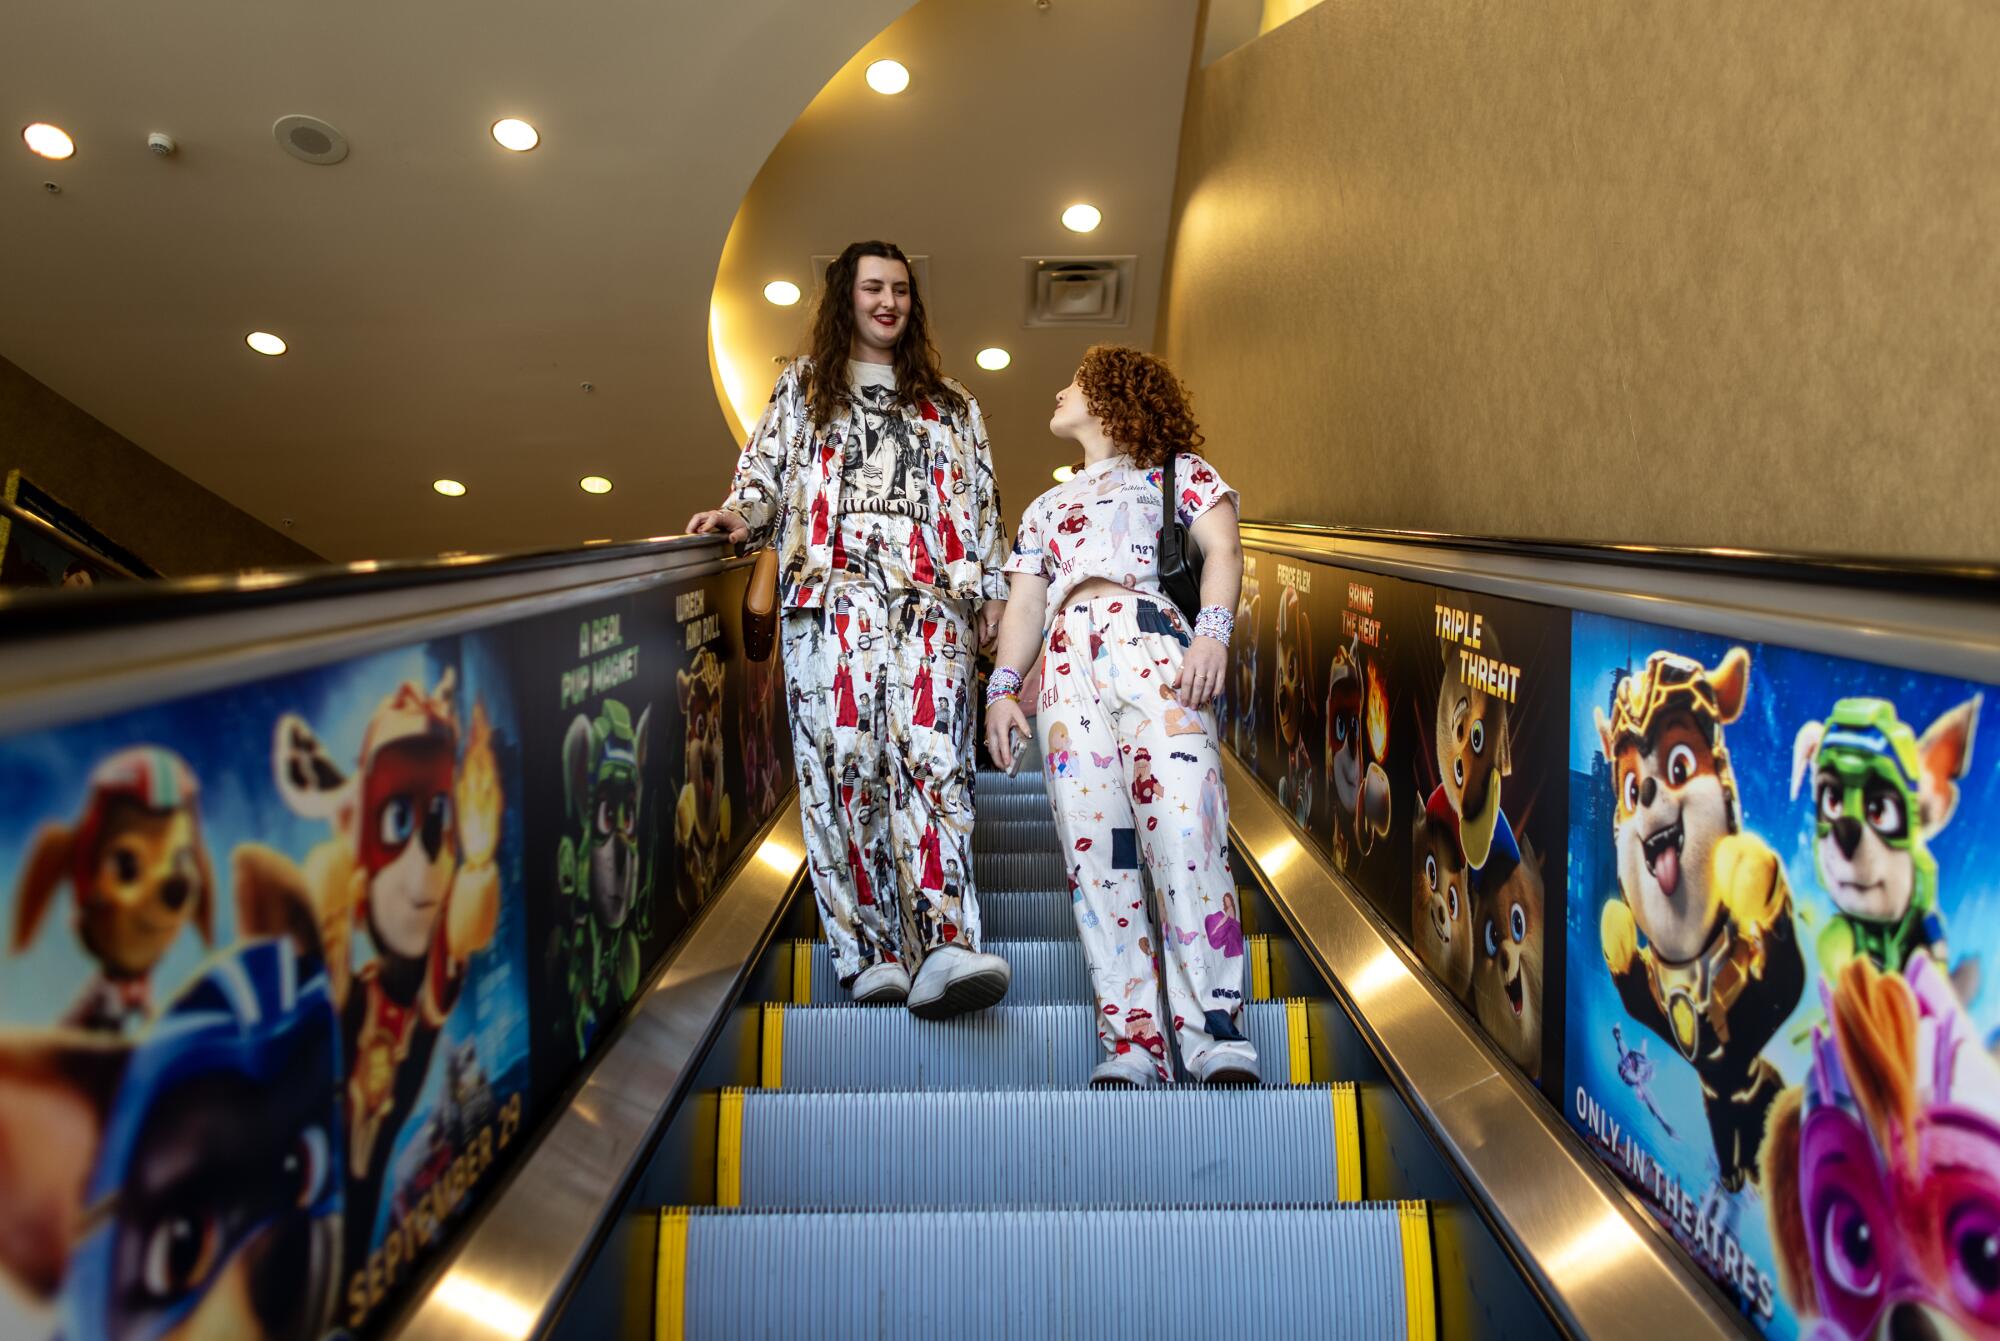  Wearing Taylor Swift pajamas, Kristen Briggs, 25, left, and Ali Zatlin, 25, of Century City, ride the escalator 